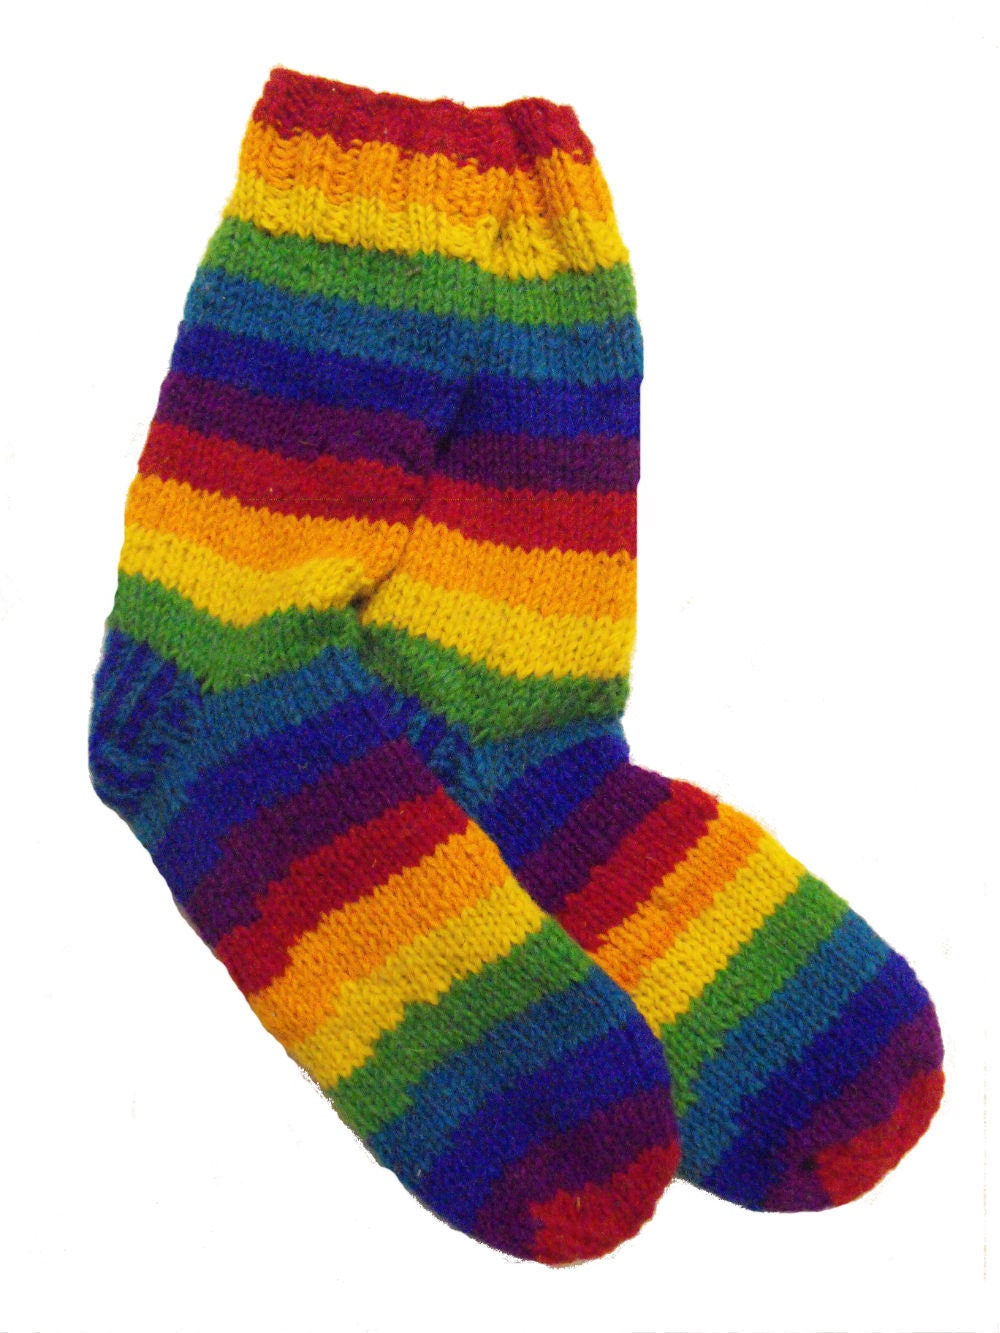 Hand Knit Wool Rainbow Slipper Socks - Fair Trade Fleece Lined